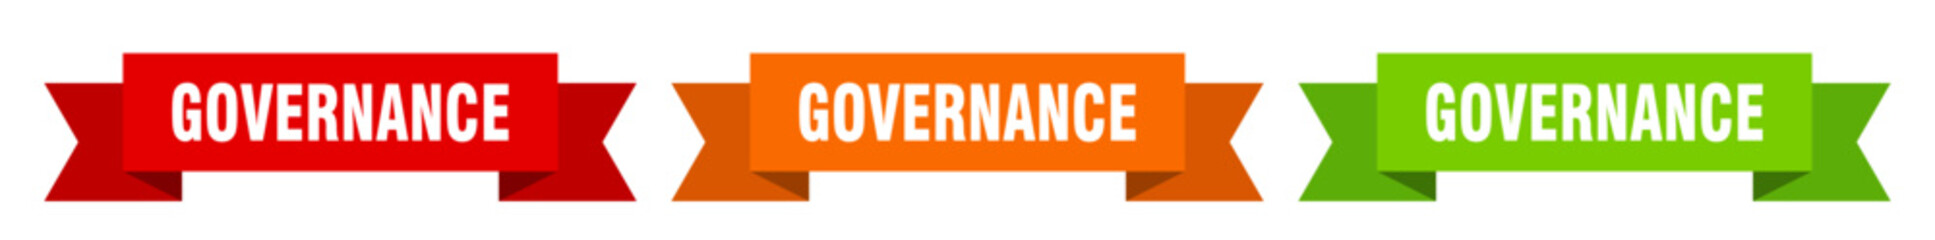 governance ribbon. governance isolated paper sign. banner